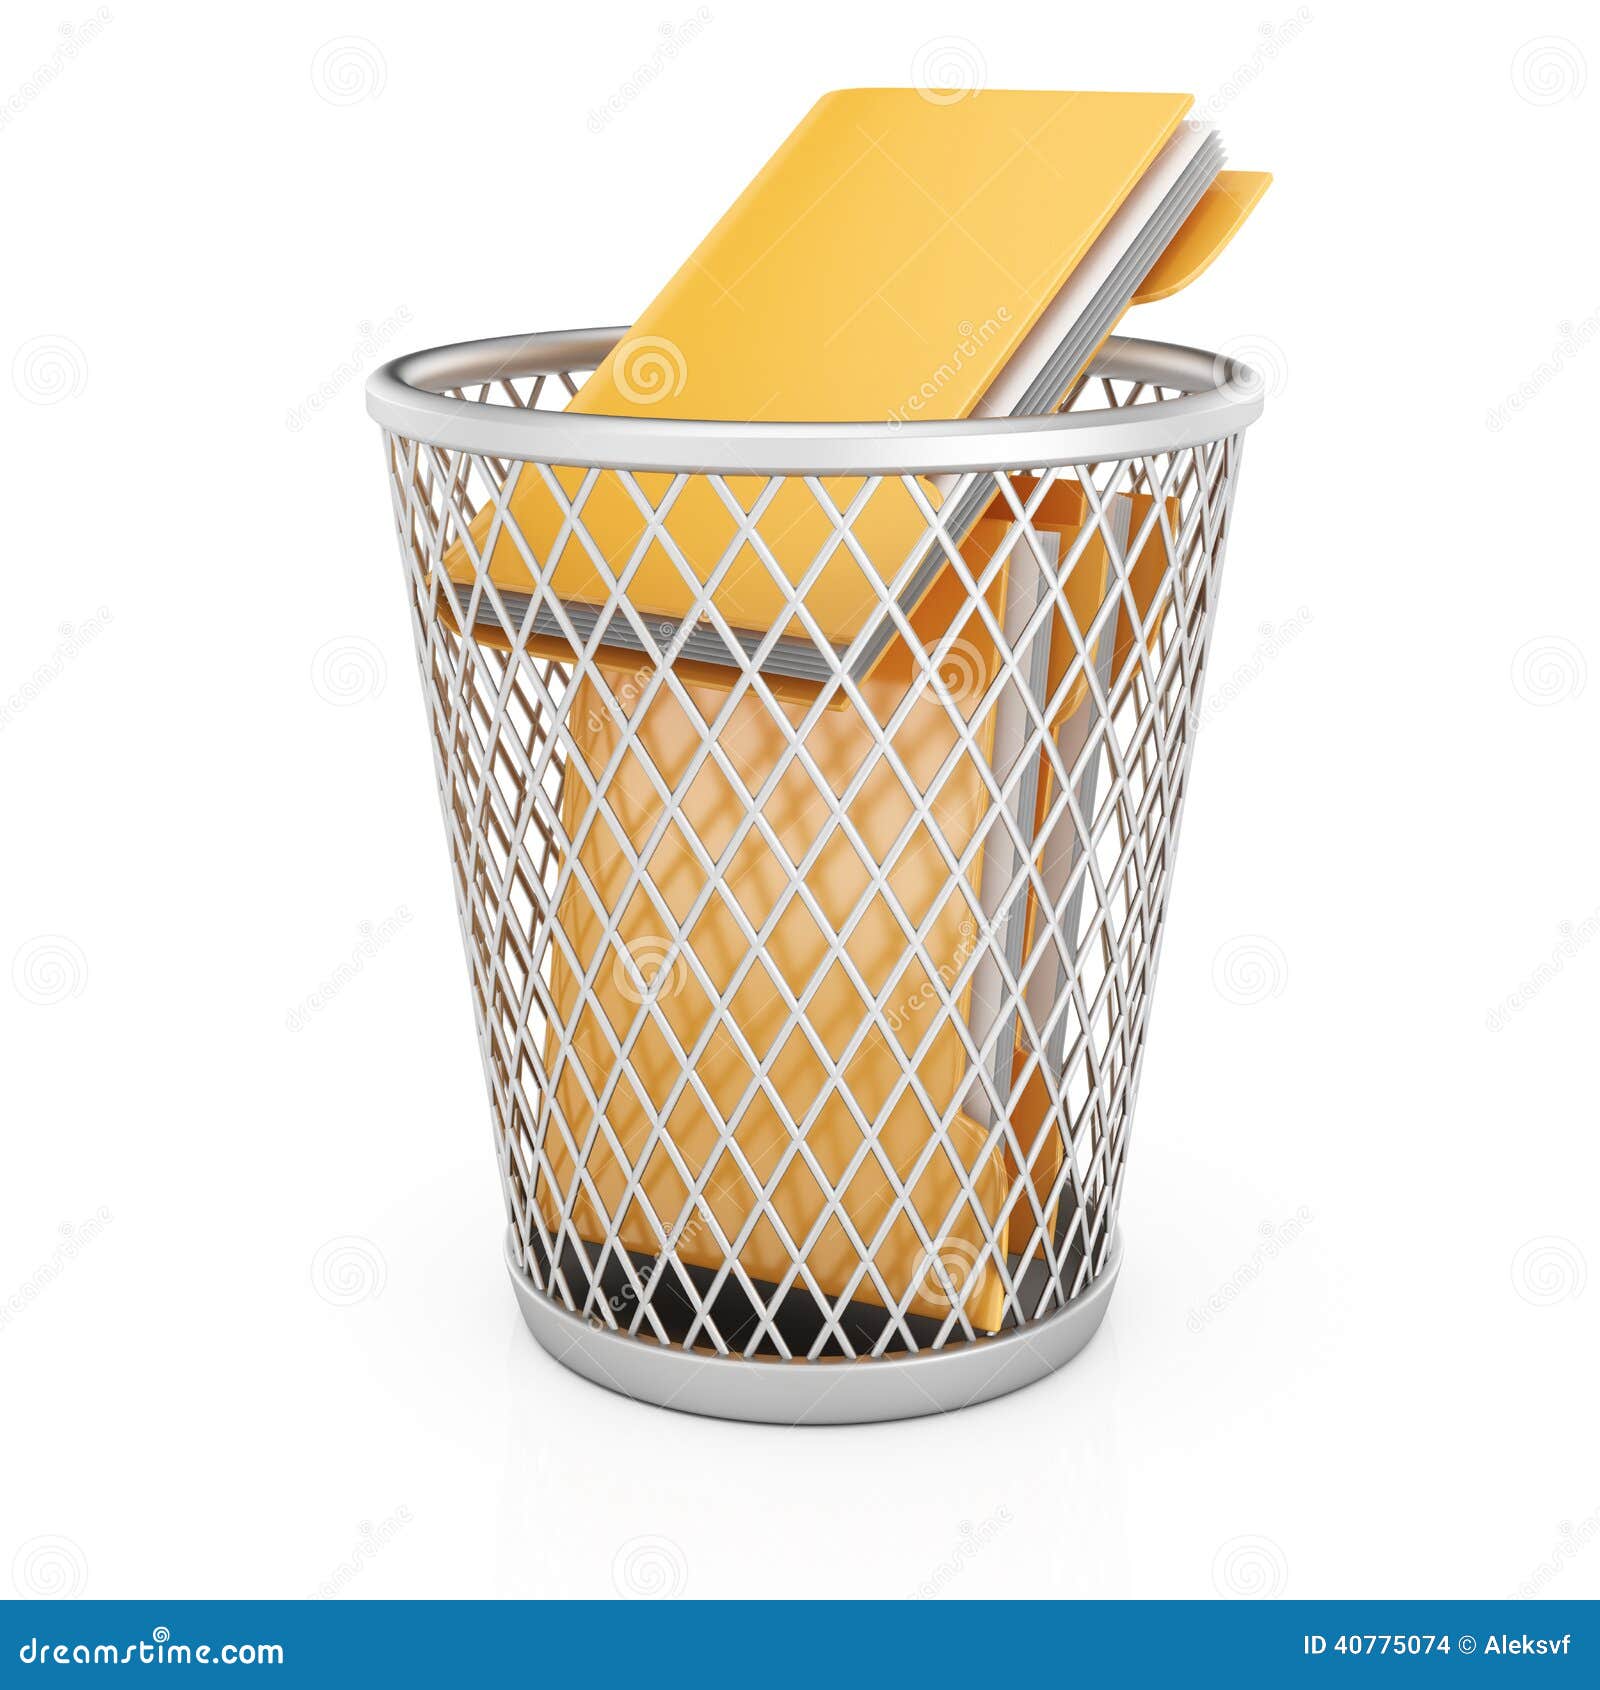 wastepaper basket with folders